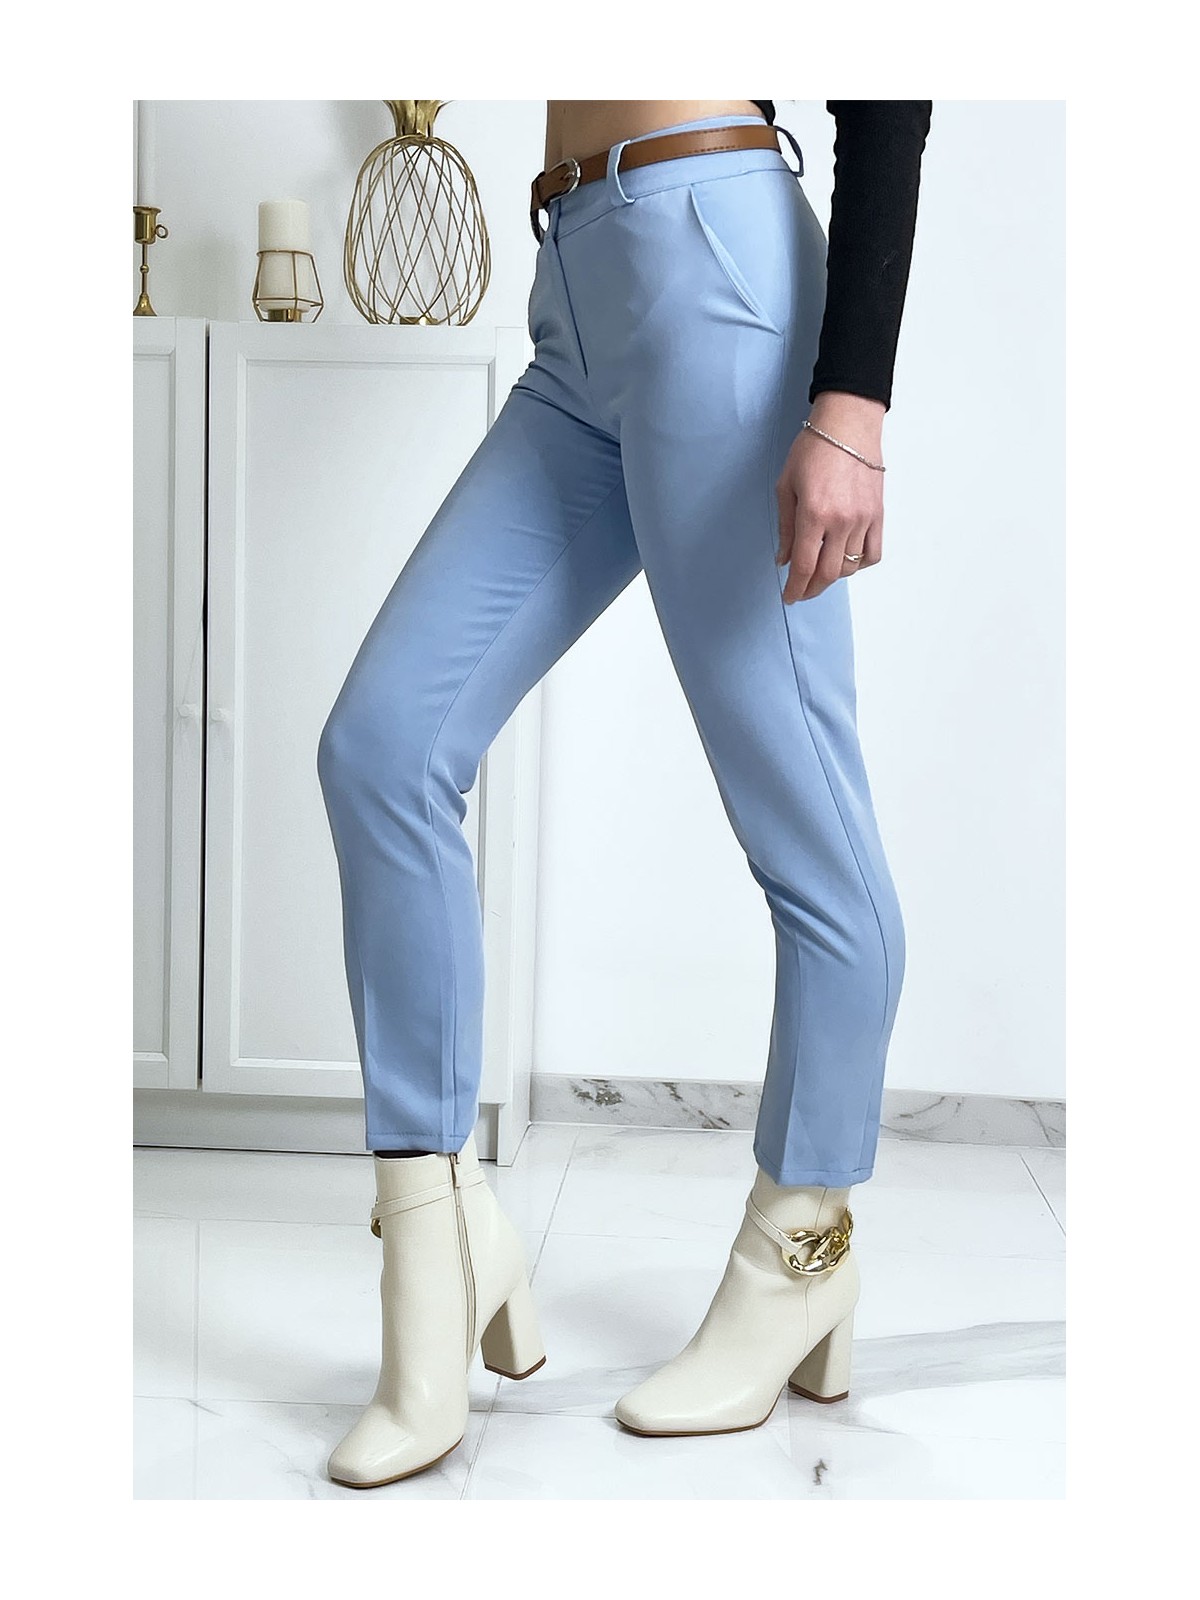 Pantalon working girl bleu avec poches et ceinture - 6